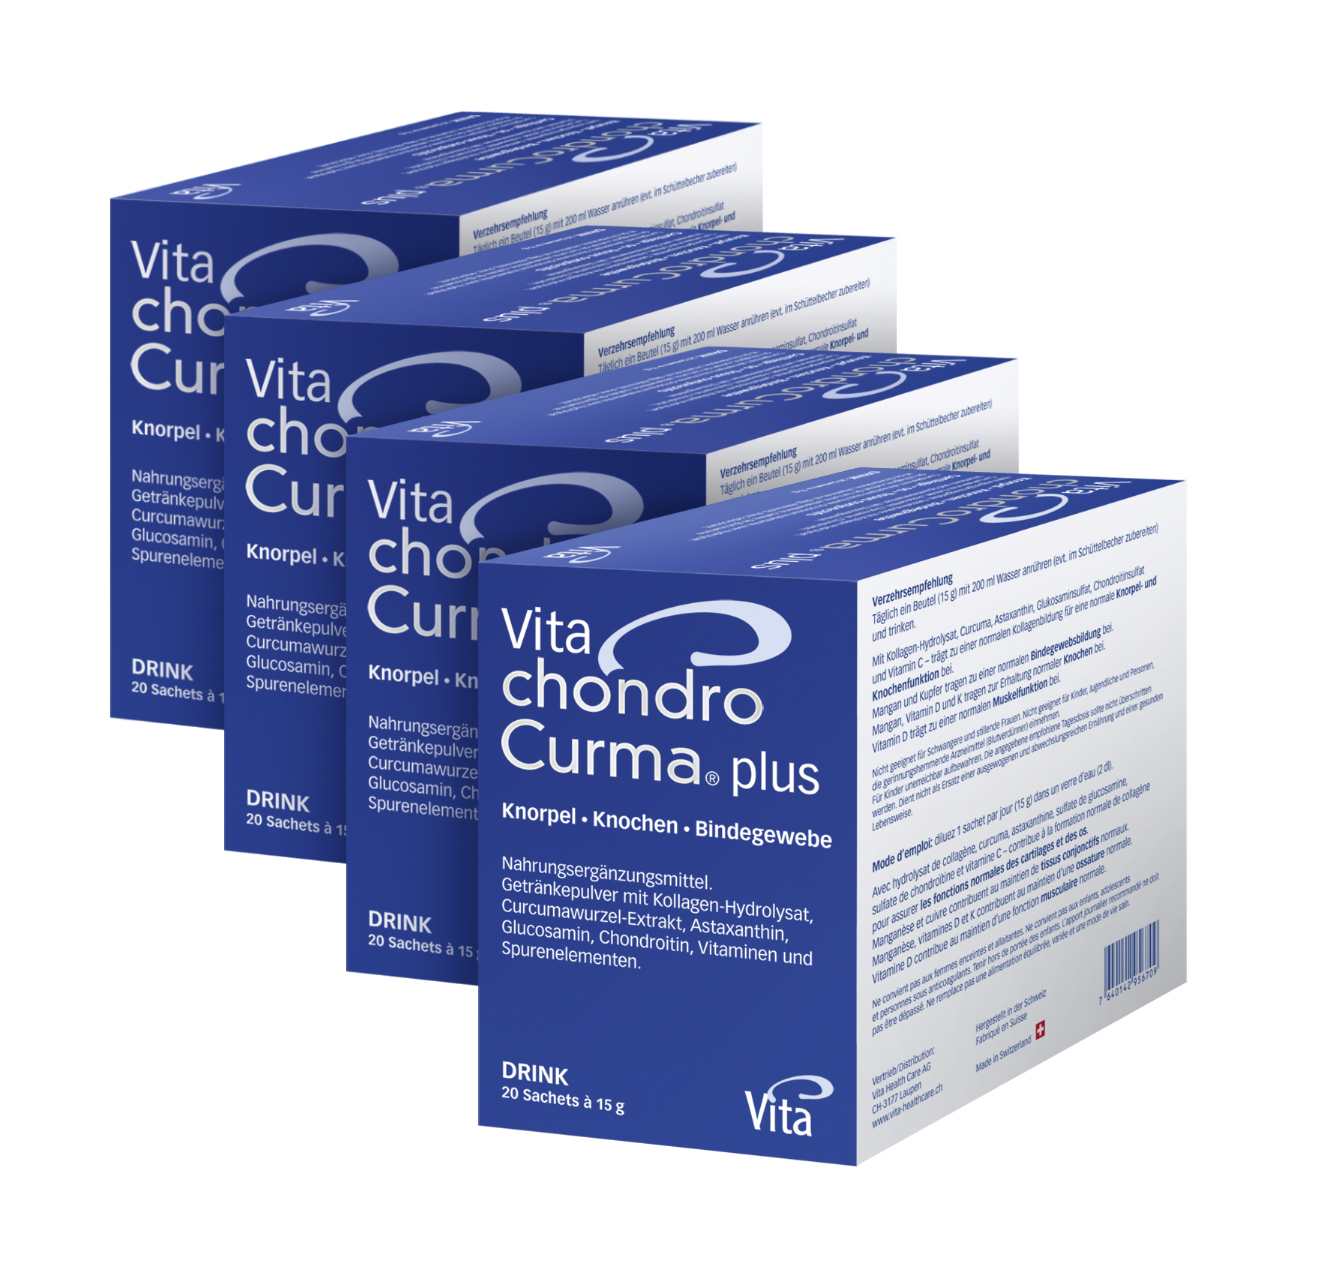 Vita chondroCurma® plus Viererpack